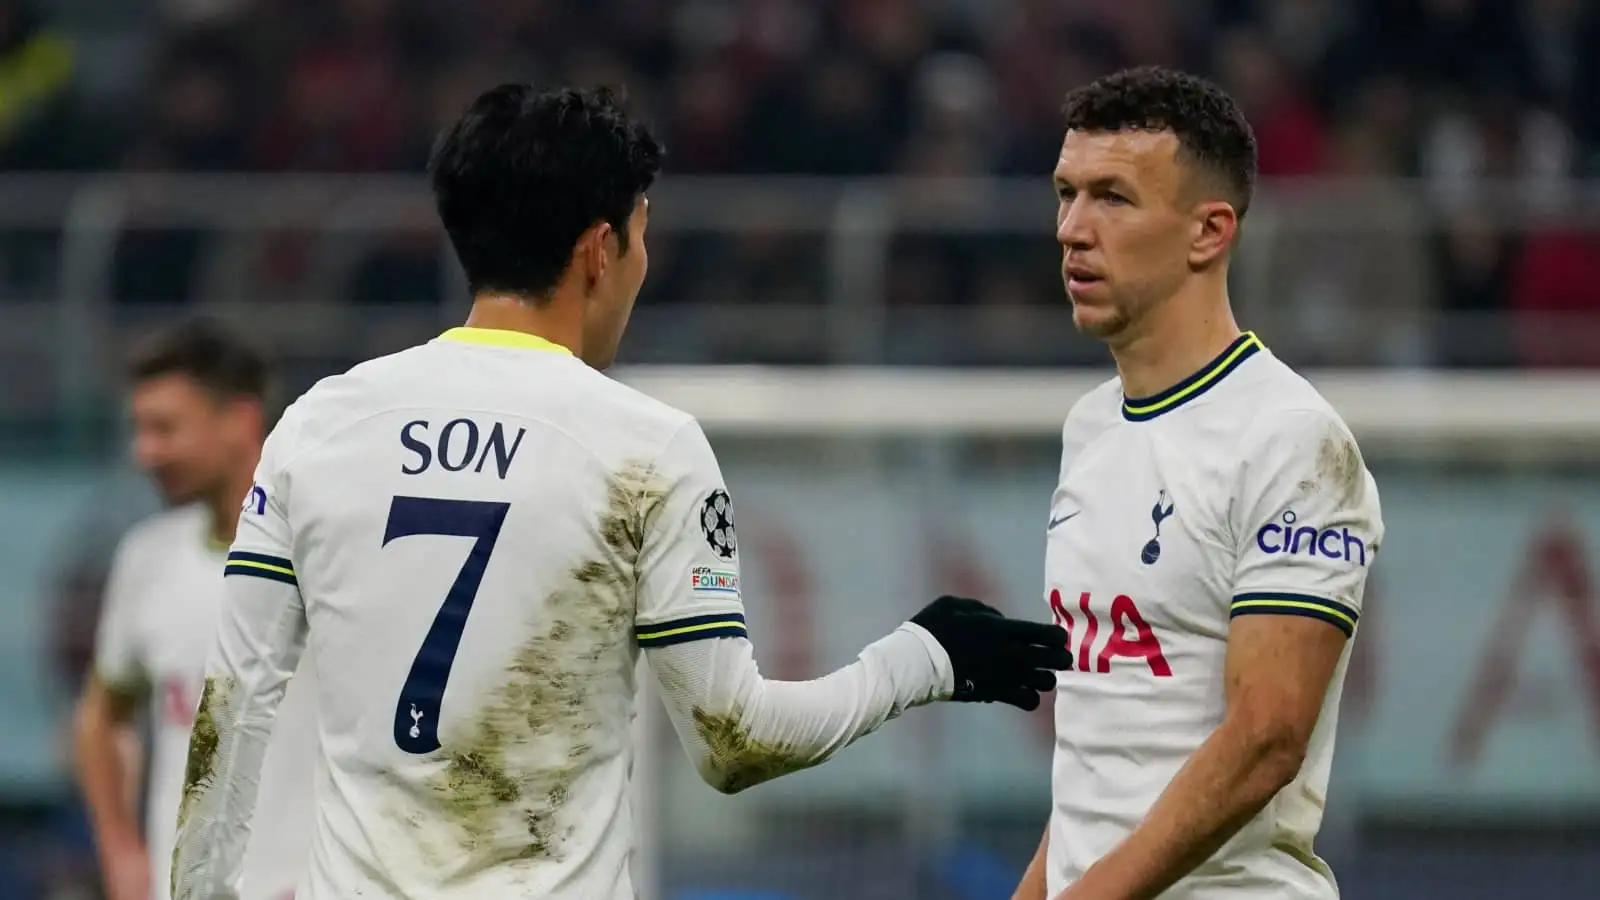 Tottenham stars Son Heung-min and Ivan Perisic